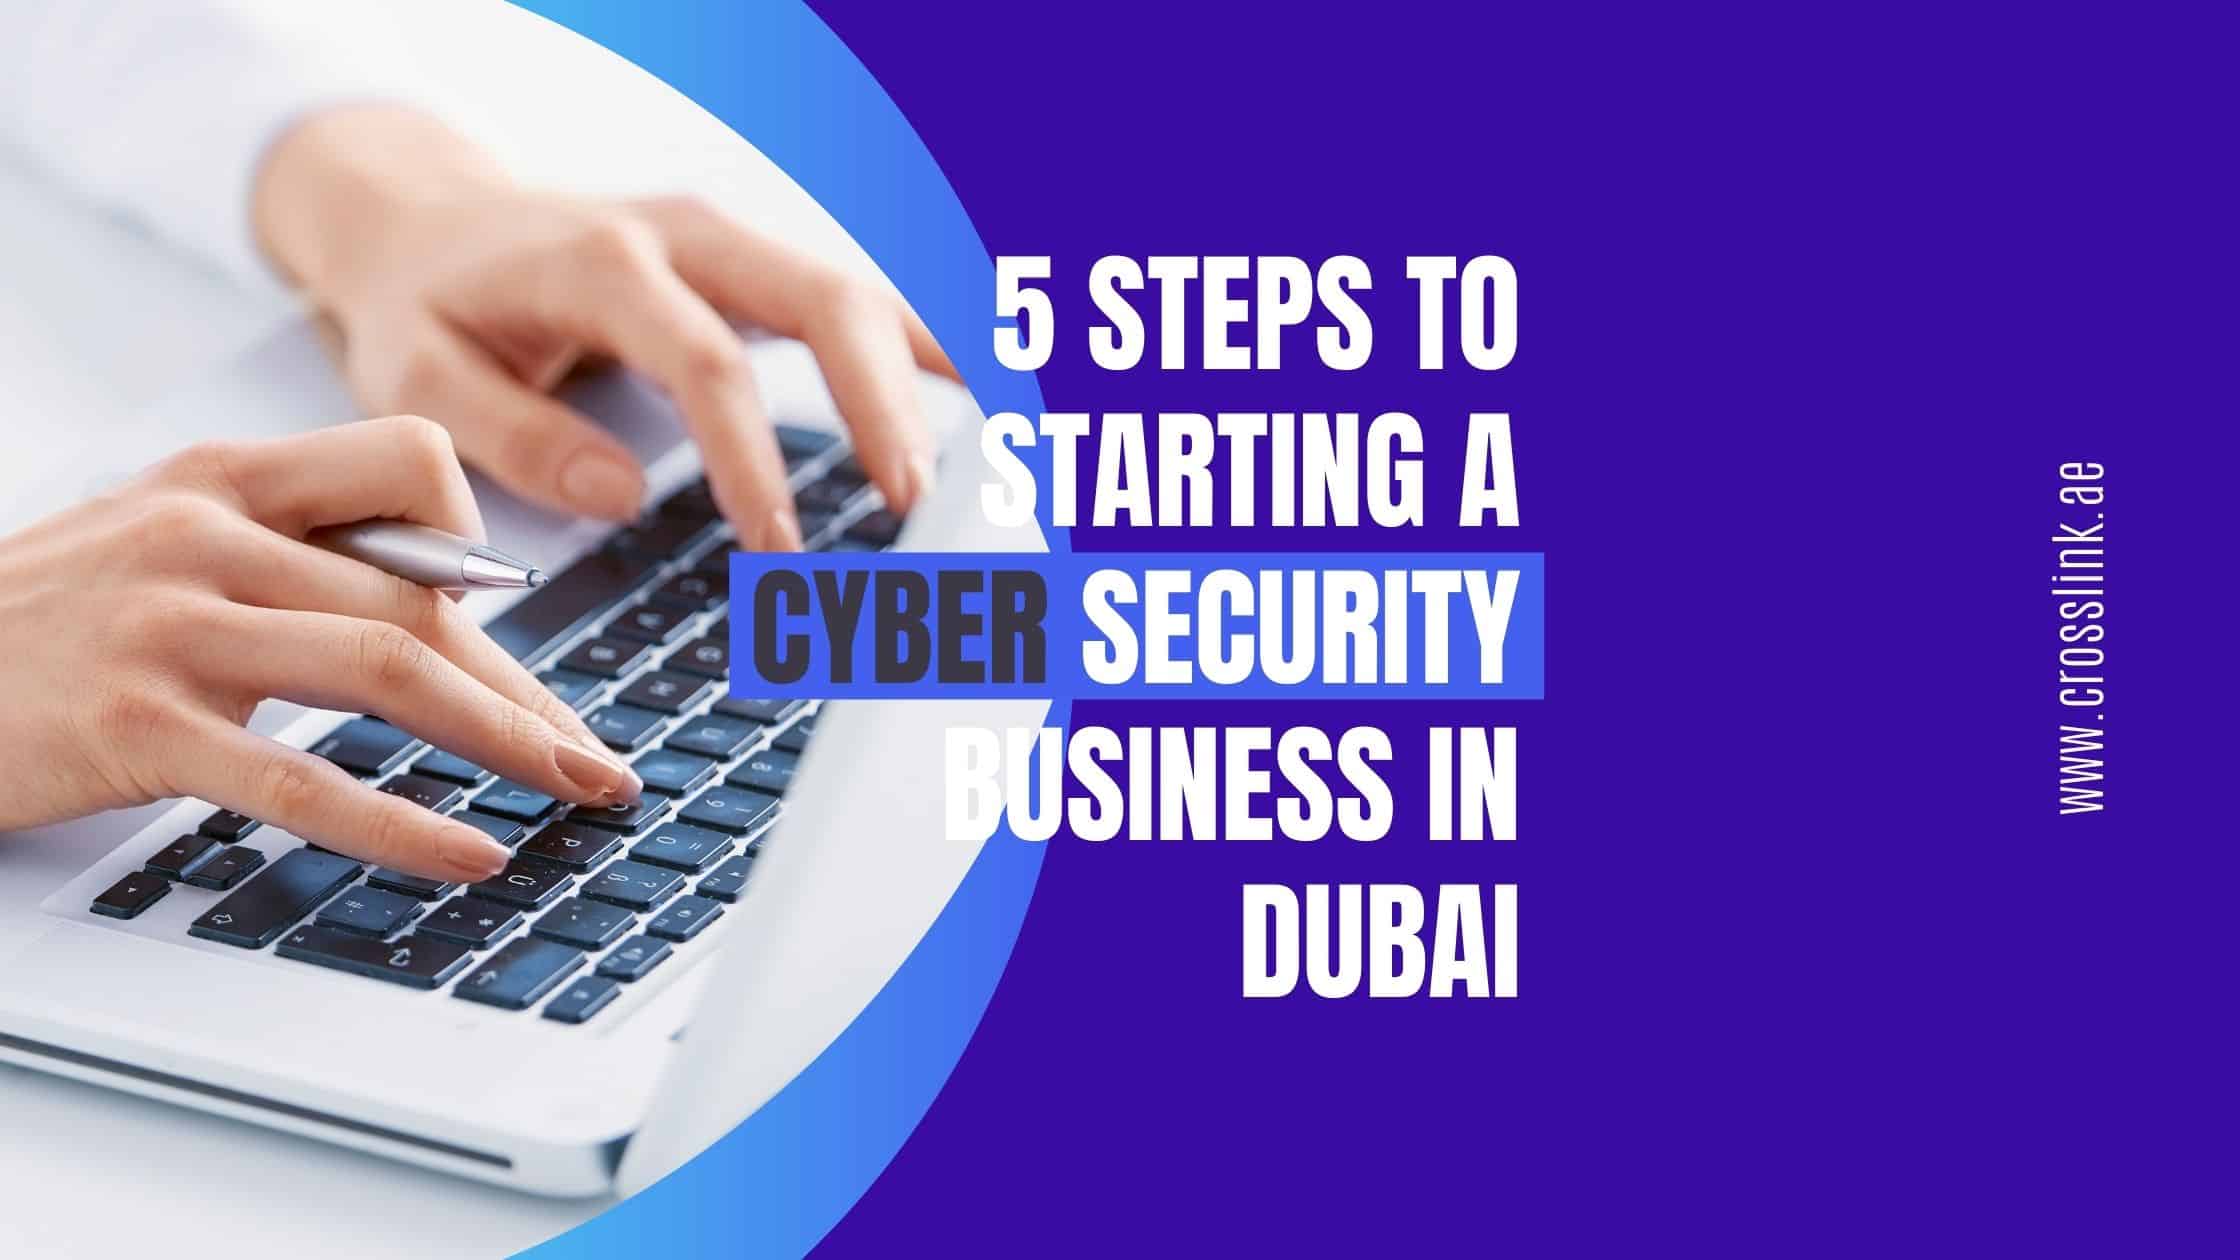 Start cyber security company in Dubai